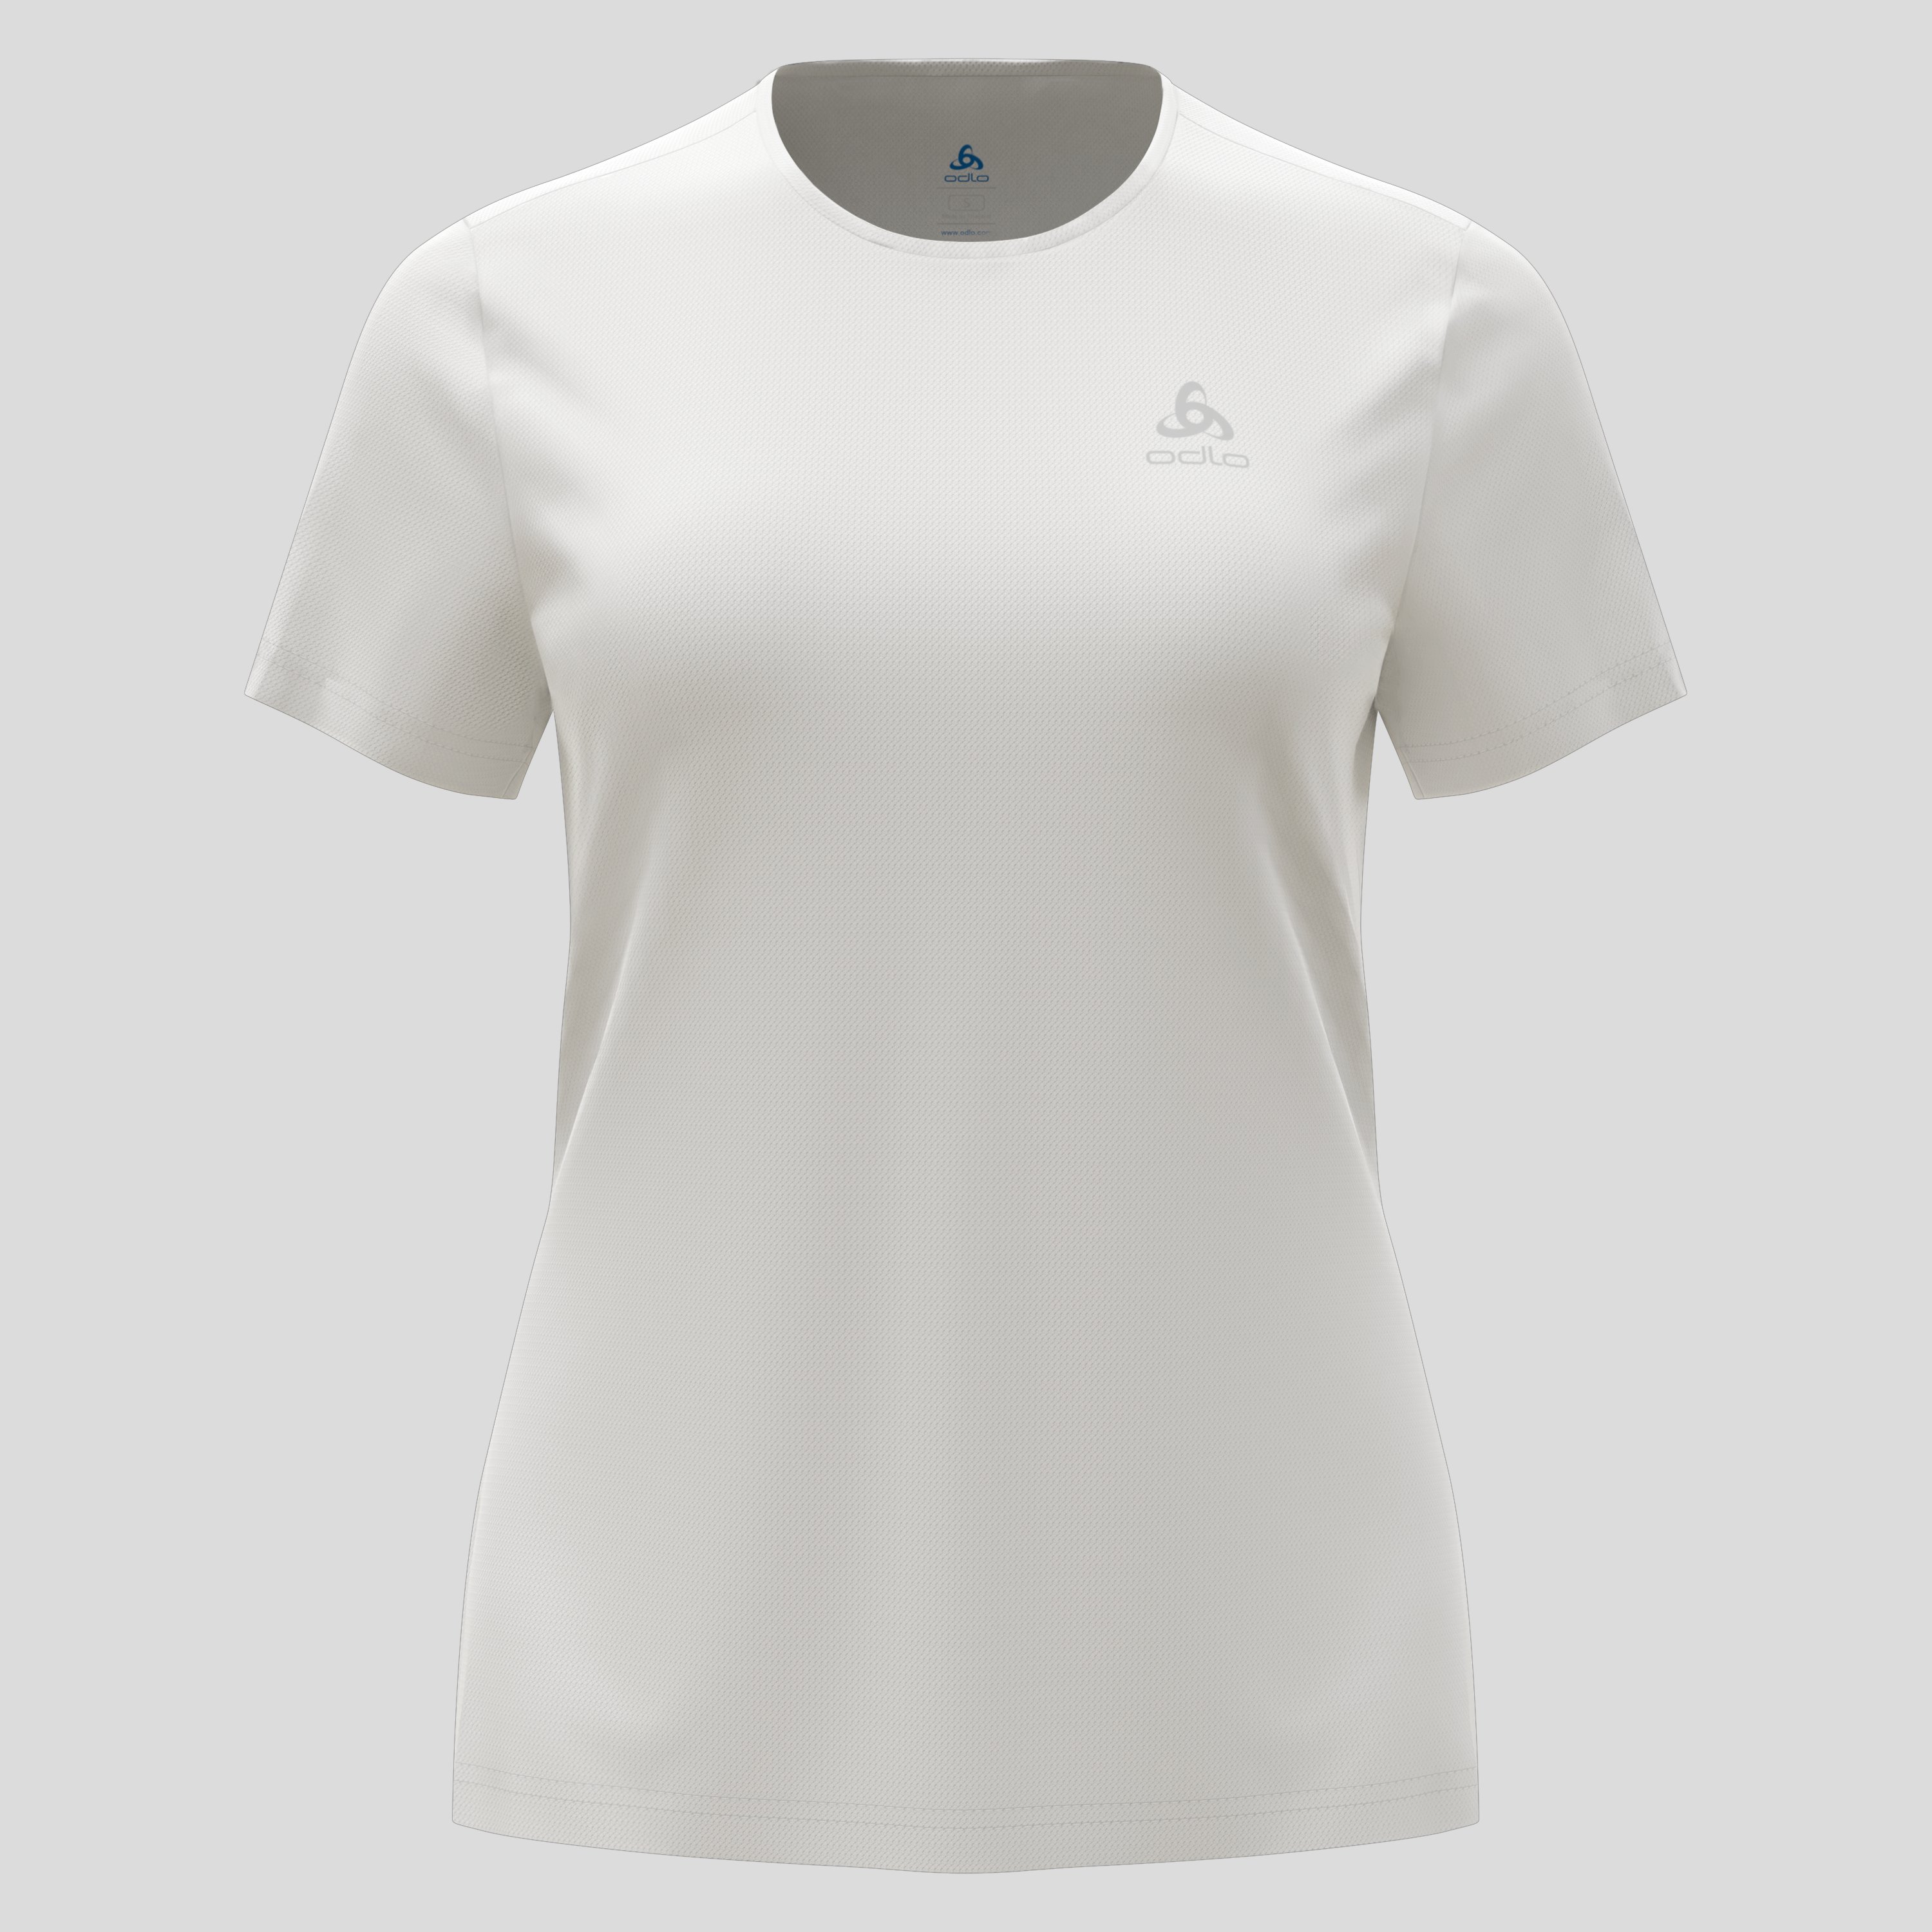 Odlo T-shirt Cardada pour femme, L, blanc